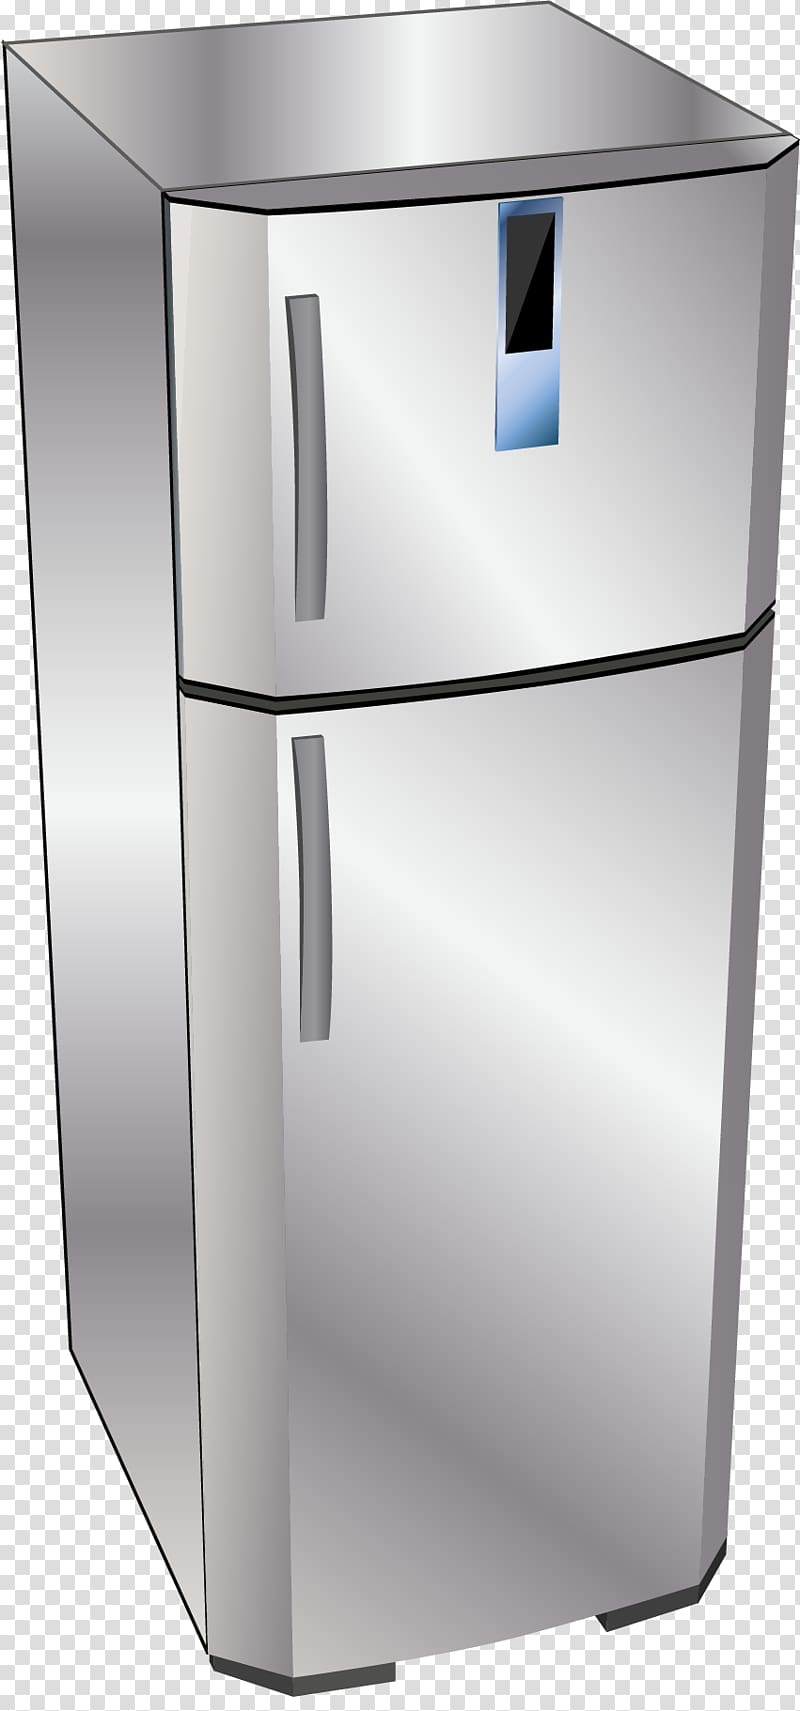 Refrigerator Home appliance, Haier refrigerator transparent background PNG clipart